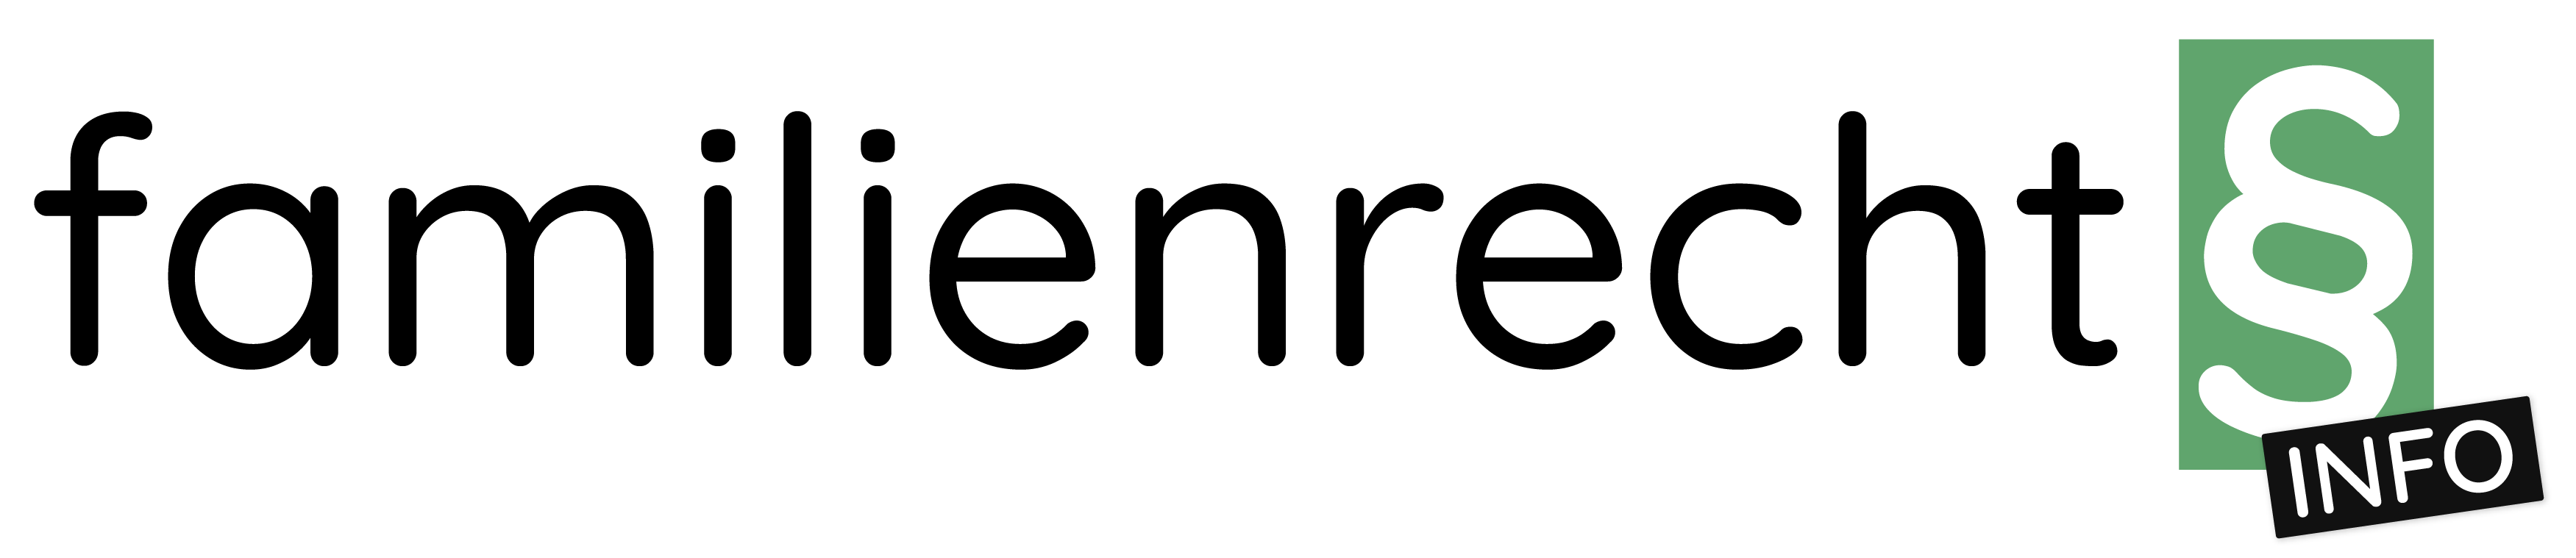 Familienrechtsinfo Logo-retina